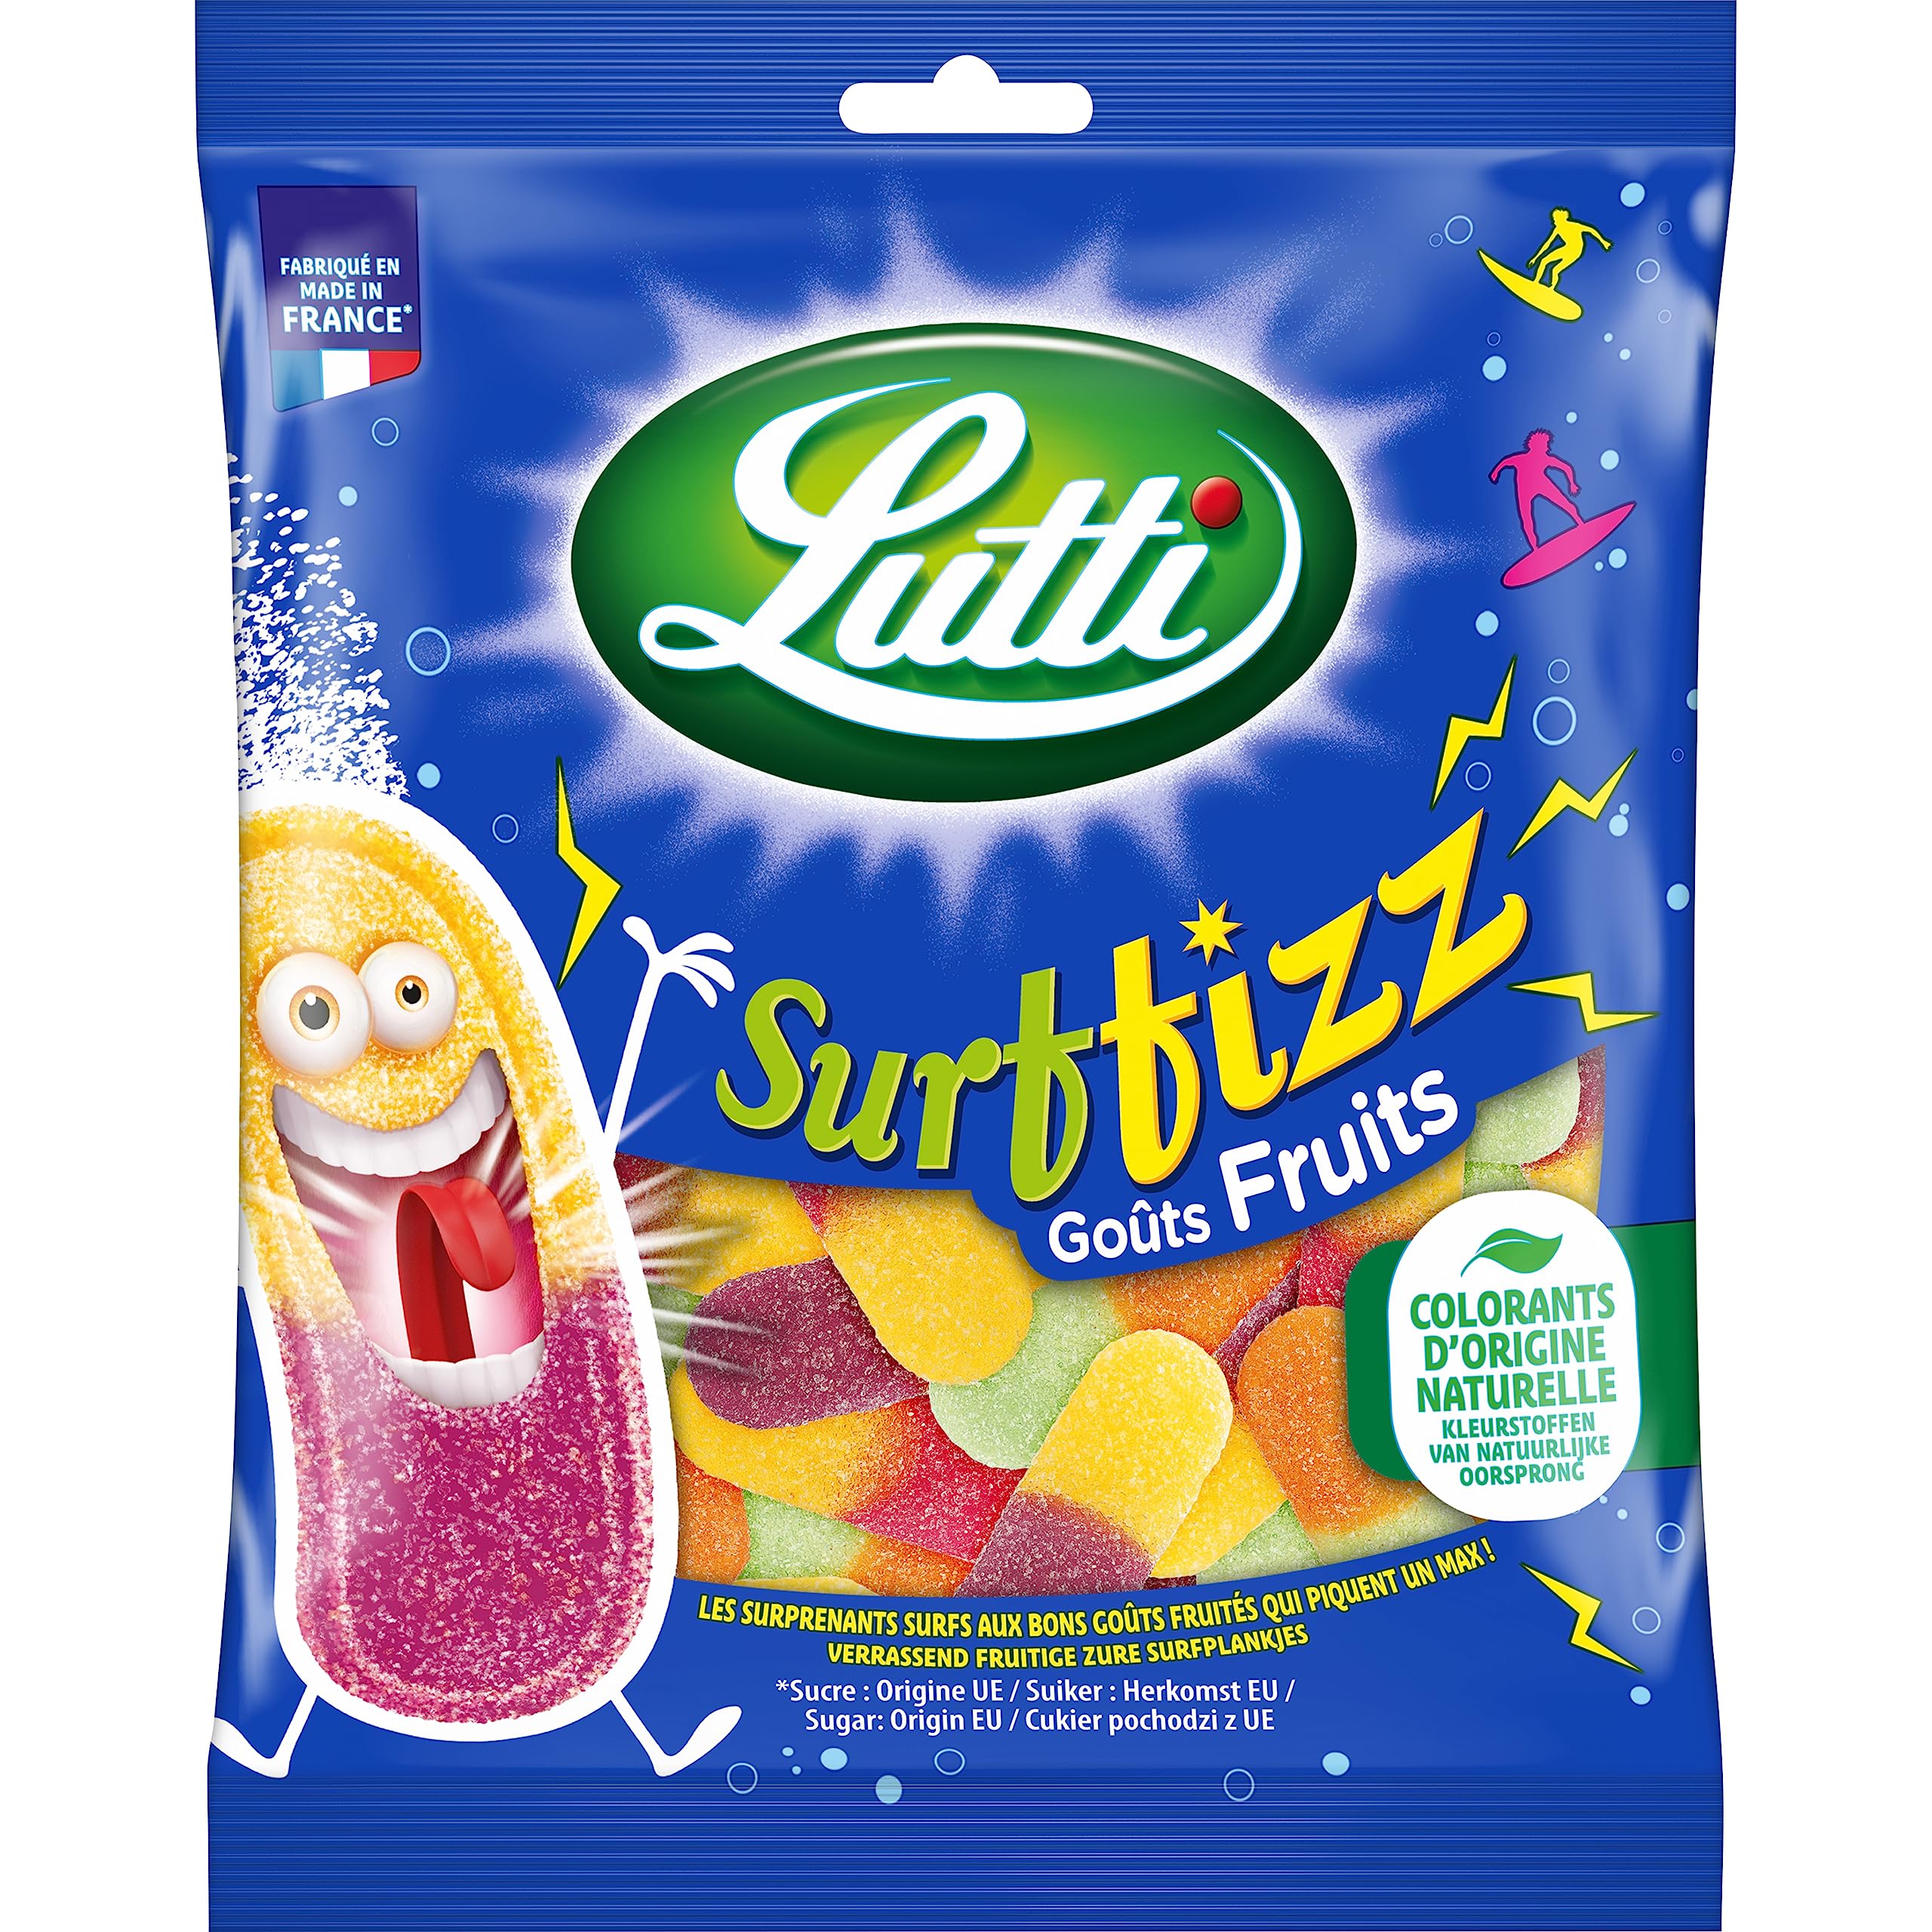 LUTTI Surfizz Fruits 100G (16 pack)- France - V45